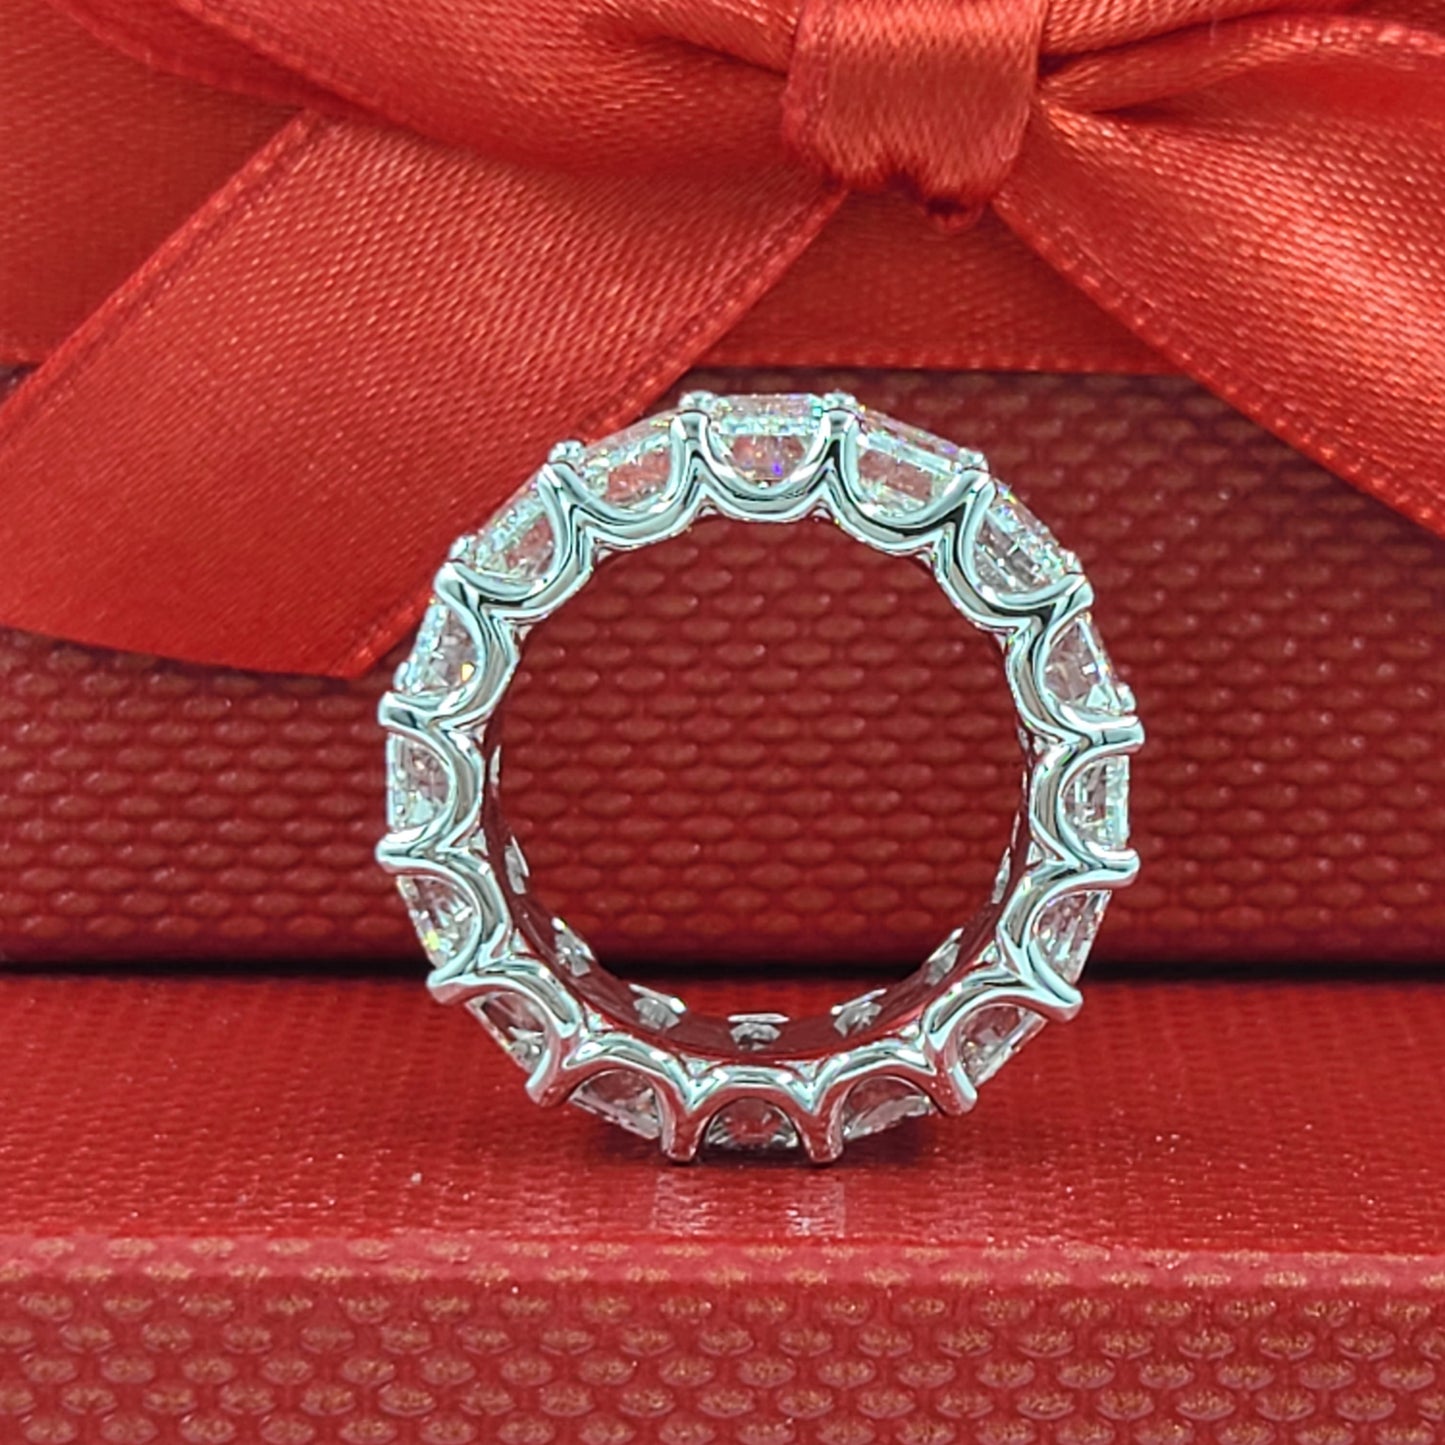 11.8ct Emerald Cut Diamond Wedding Ring / 18K gold Emerald Cut Natural Diamond Full Eternity Width 9mm Ring / Anniversary gift